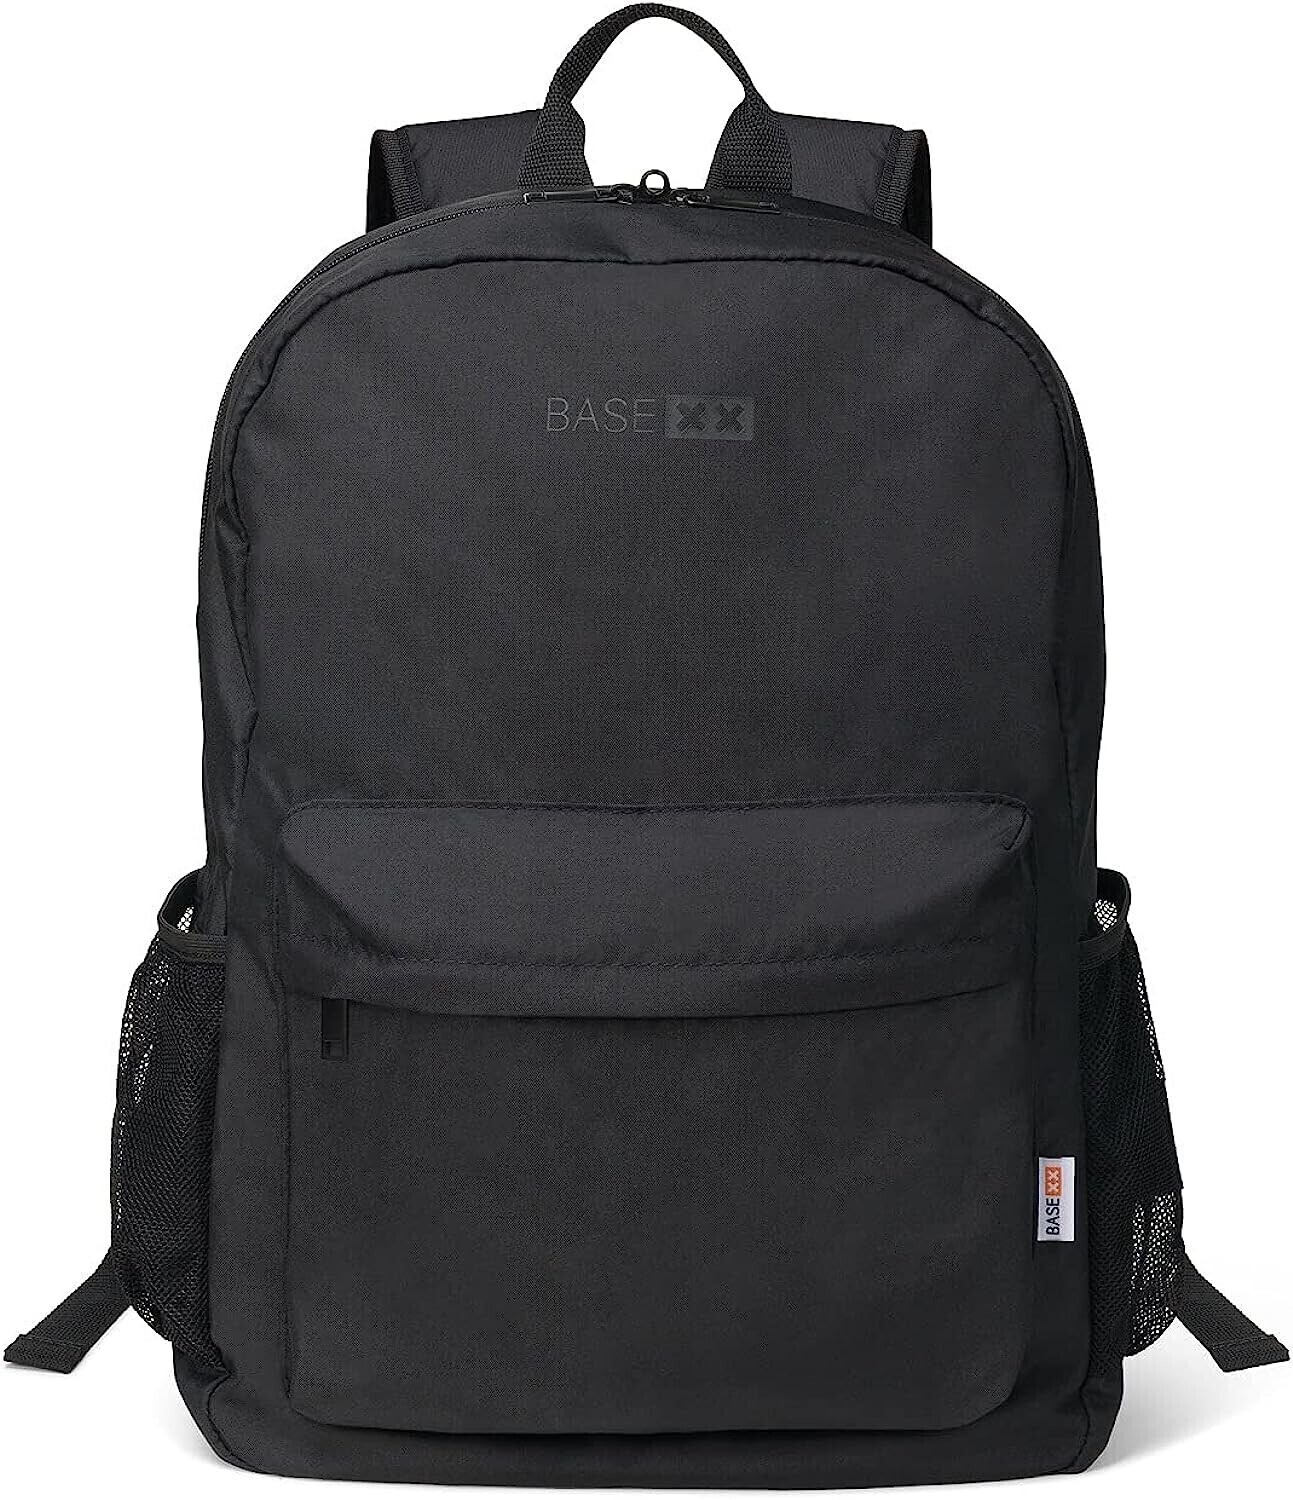 Dicota D31850 notebook Case 14.1" Backpack black